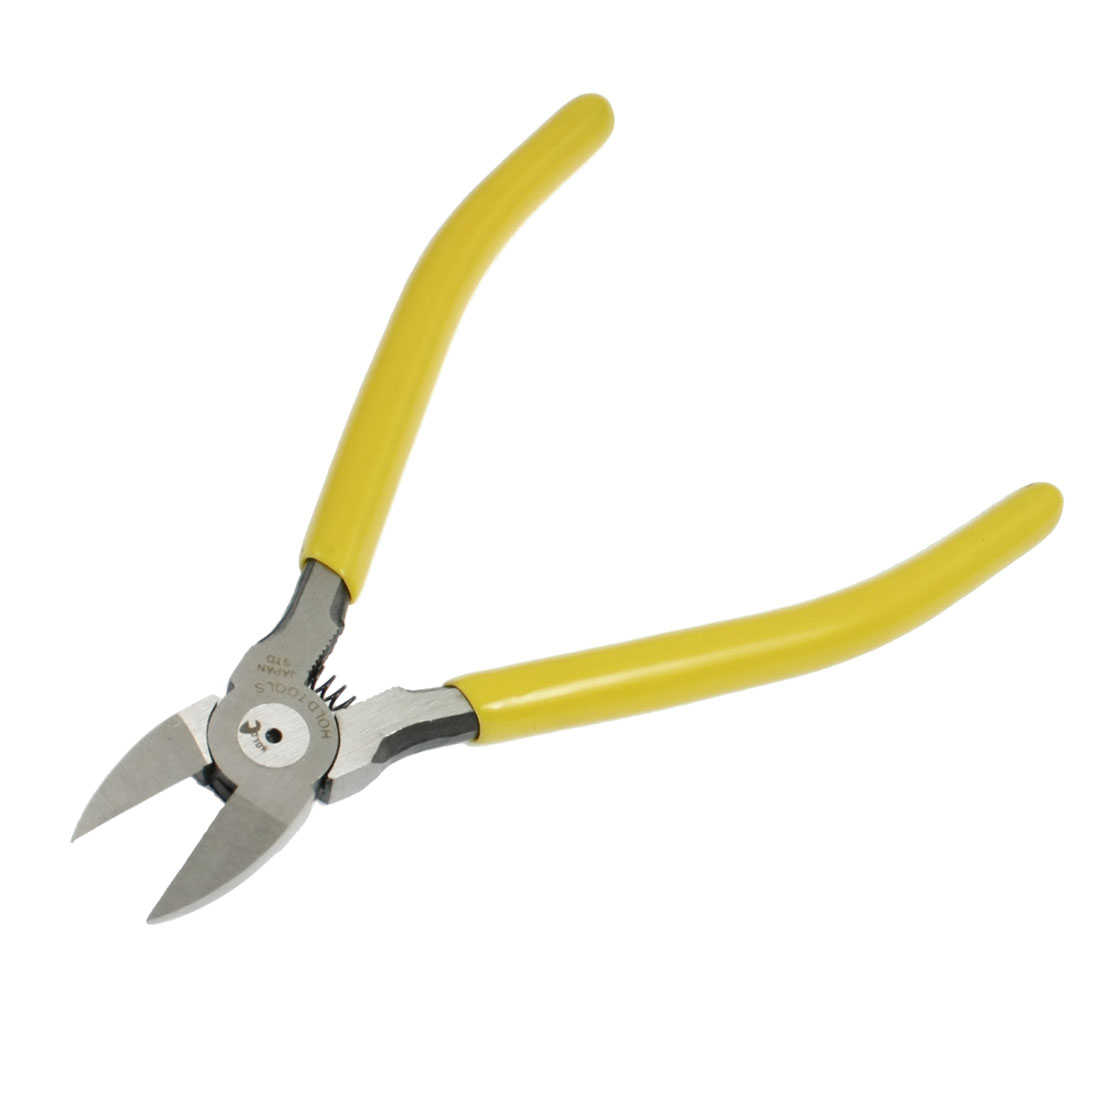 Unique Bargains Unique Bargains 6' Long Yellow Handle Wire Cutter Side Cutting Pliers Hand Tool